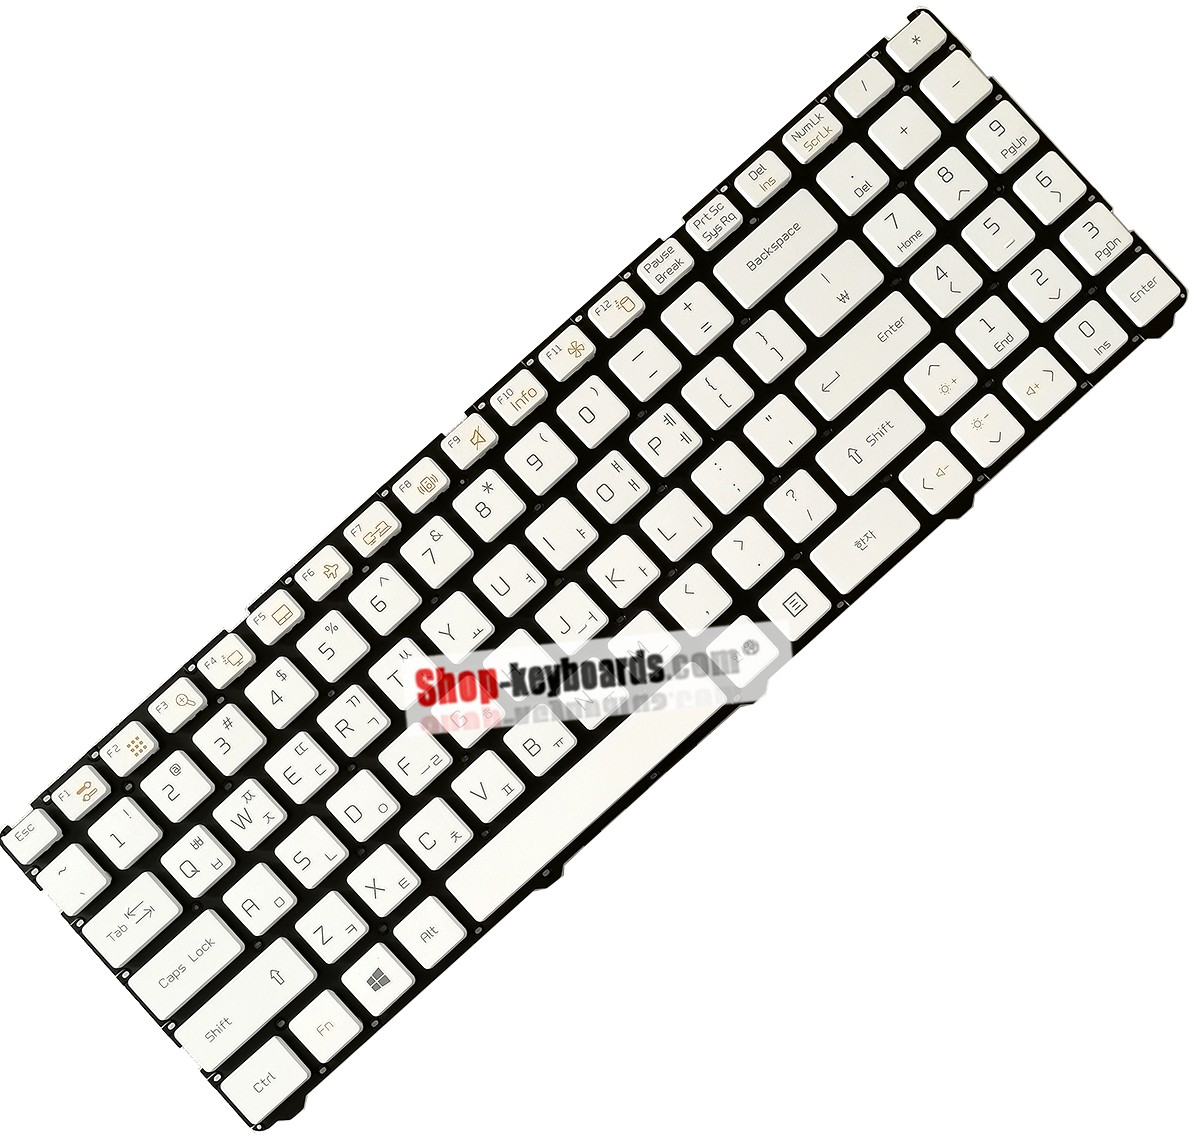 LG MP-12K73SU-9207 Keyboard replacement